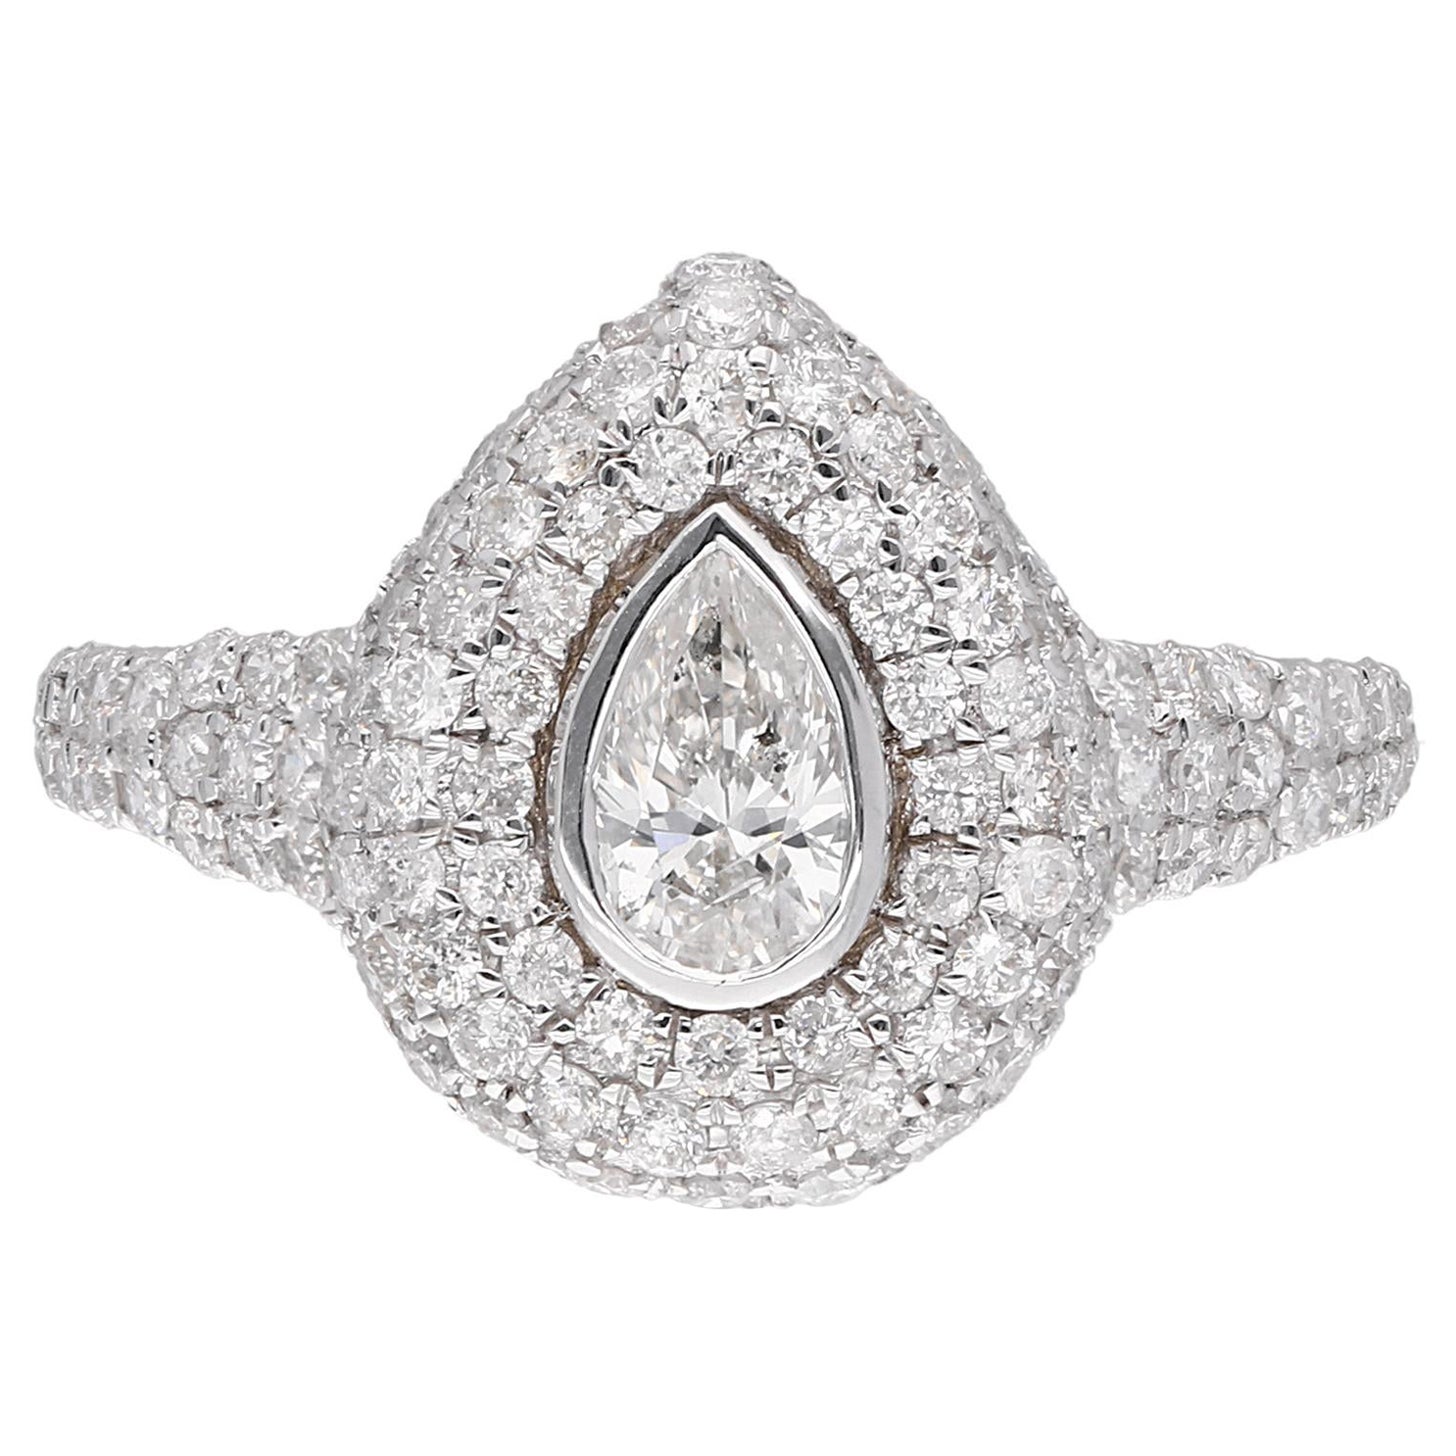 1.54 Carat Pear Diamond Studded Ring 14 Karat White Gold Handmade Fine Jewelry